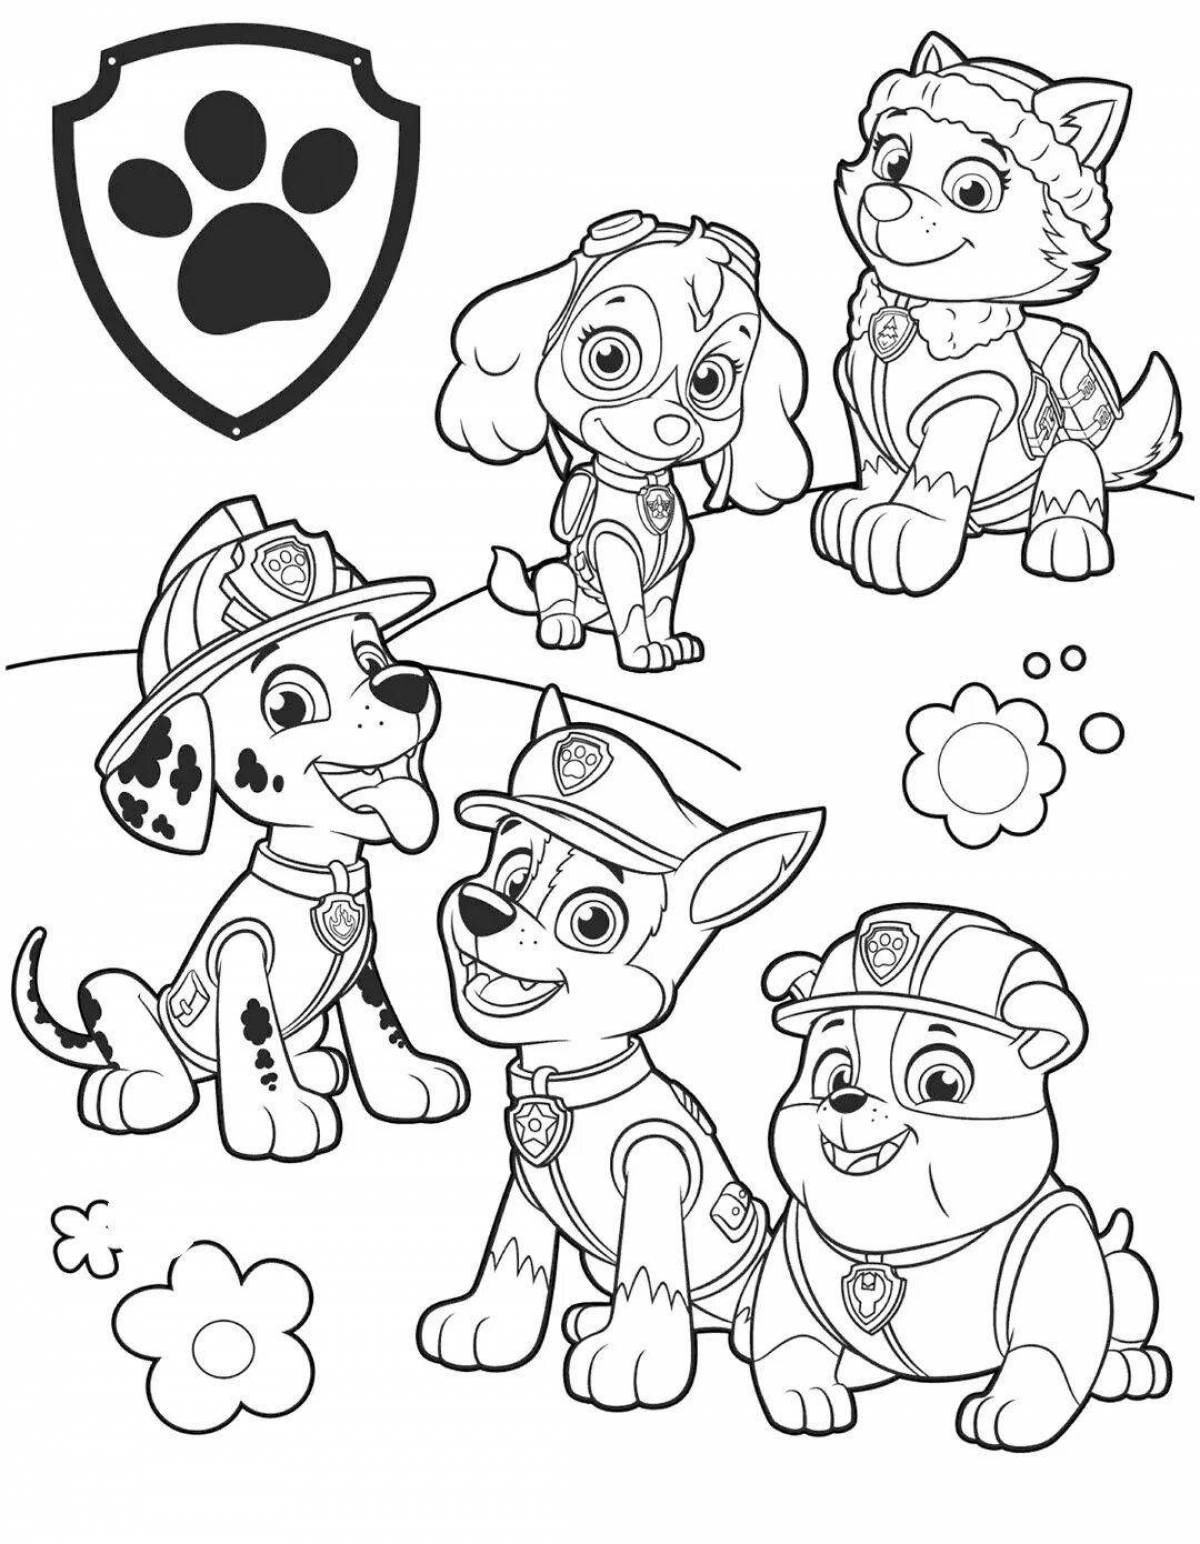 Coloring page sweet dog patrol